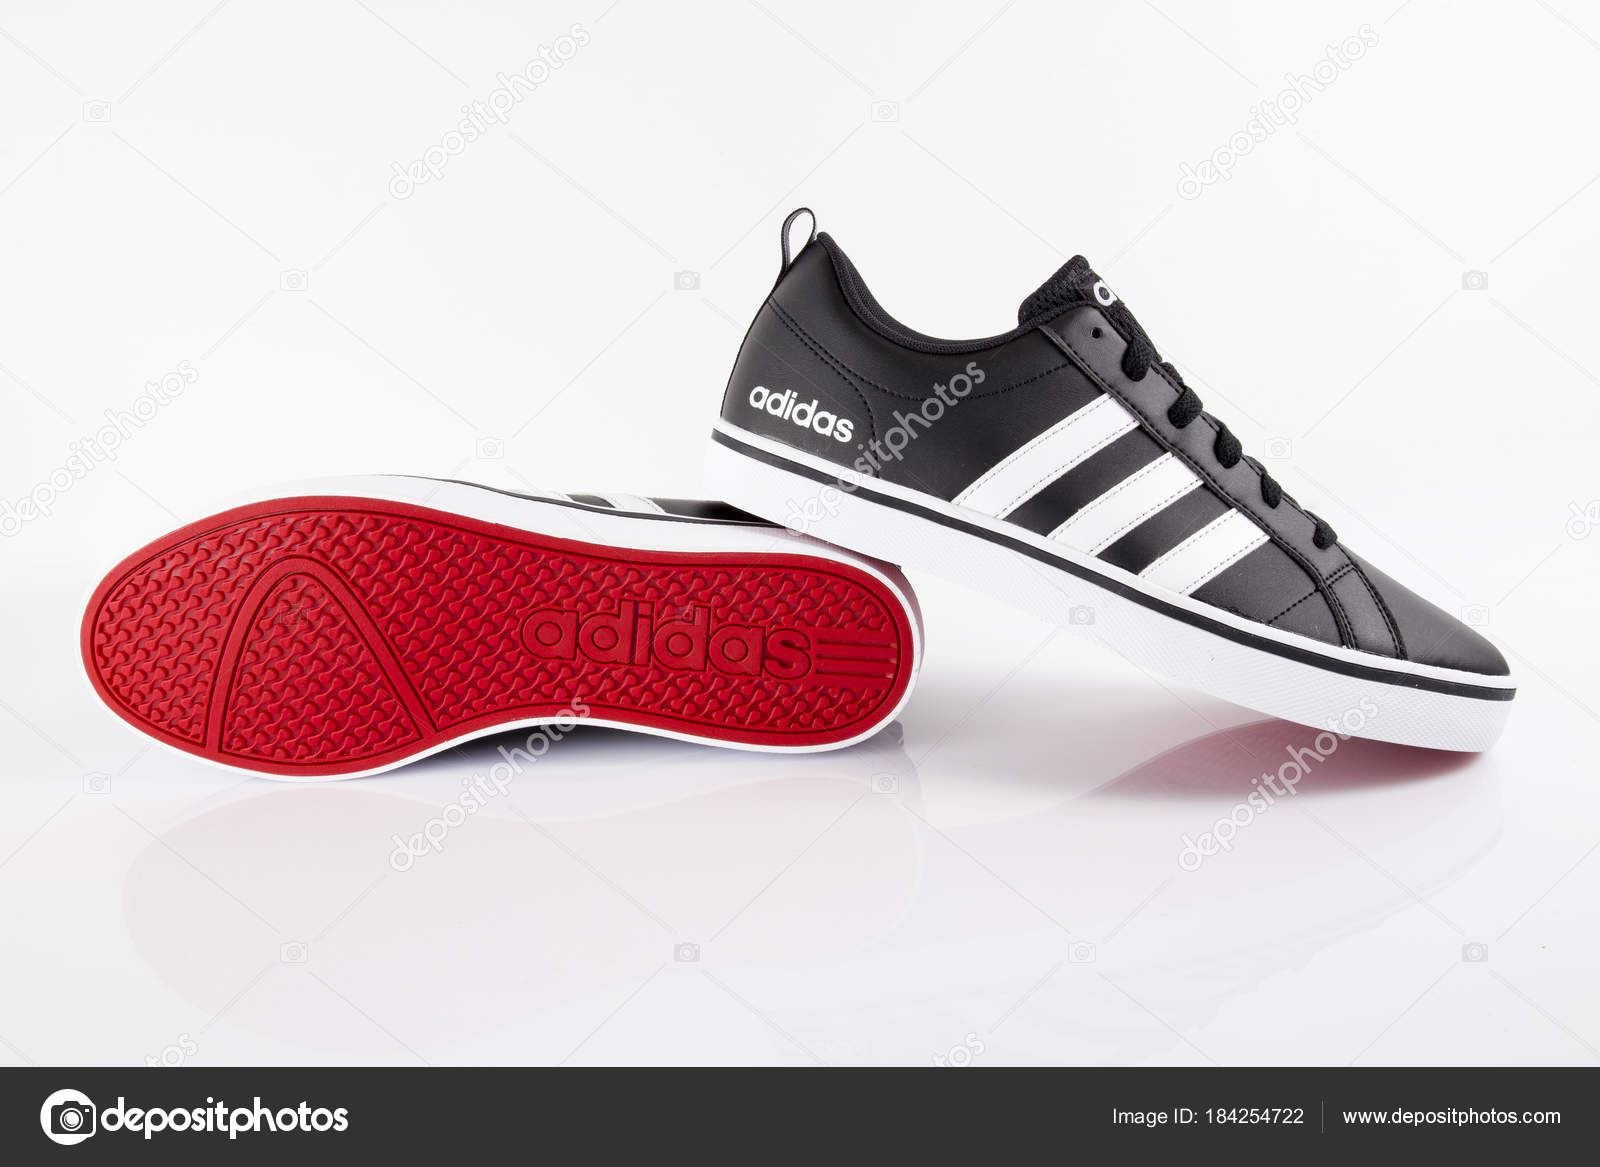 Afife Portugal February 2018 Adidas Adidas Multinational Company – Stock Photo © georgevieirasilva #184254722